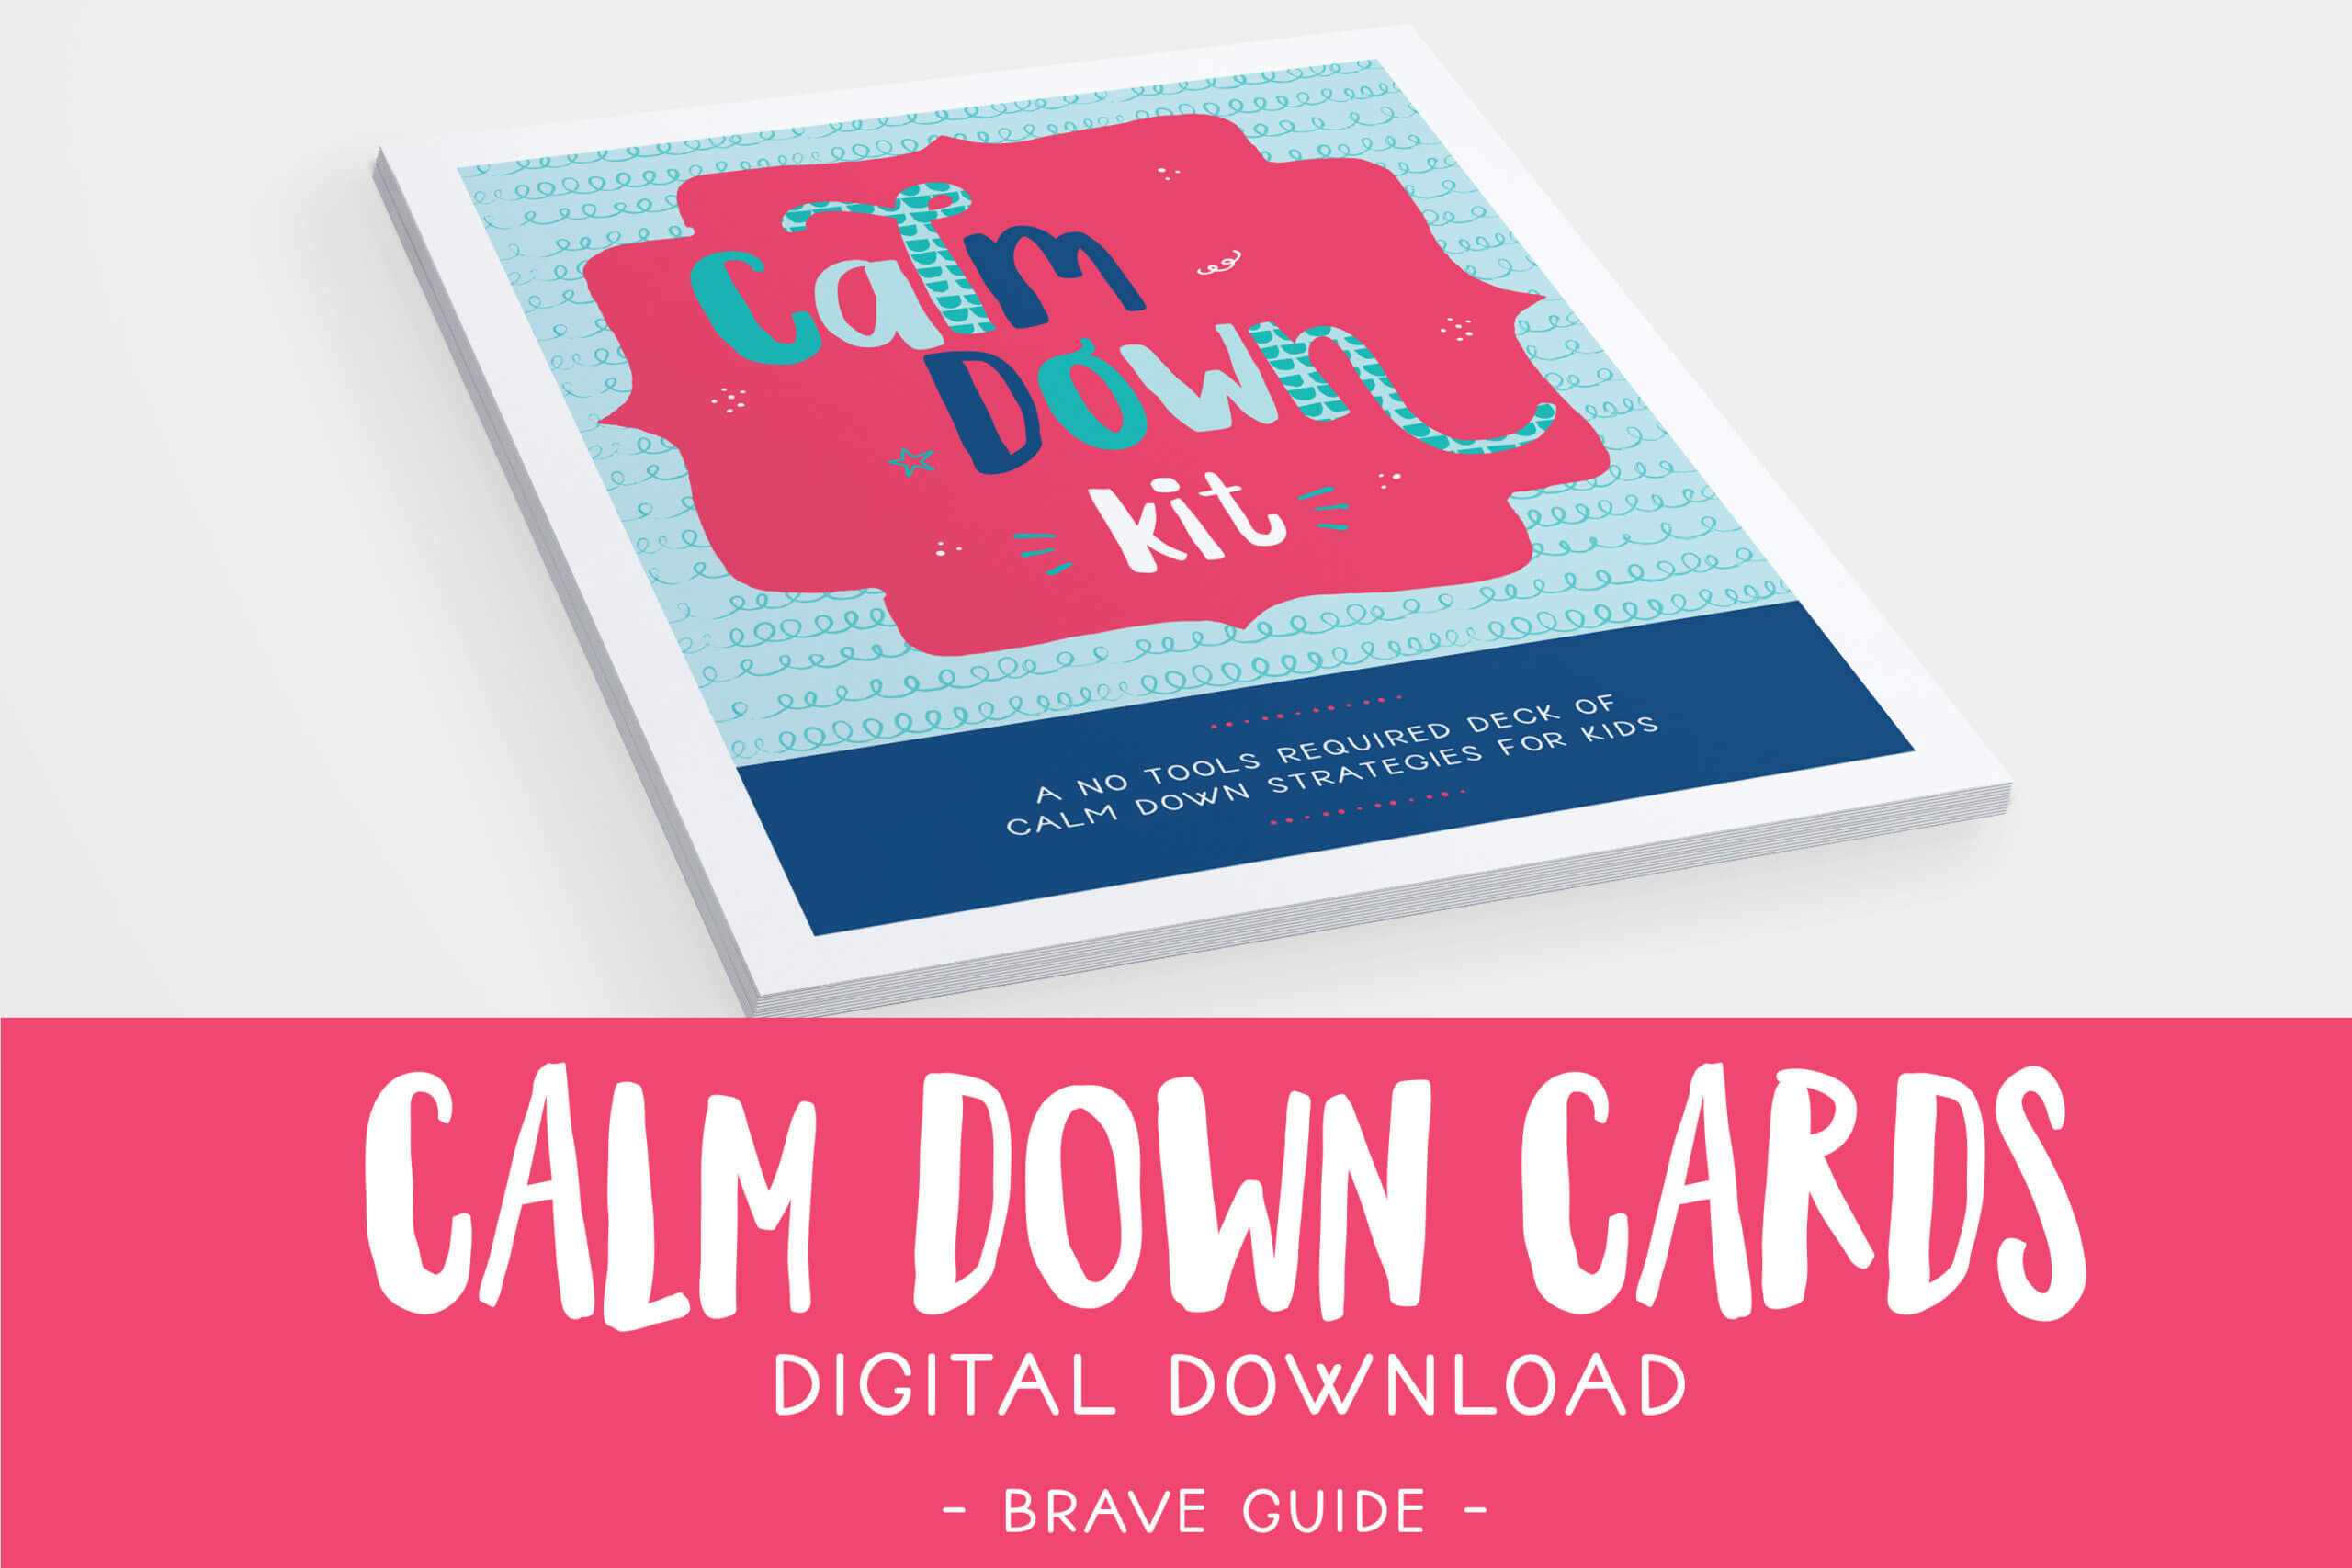 downloadable card deck